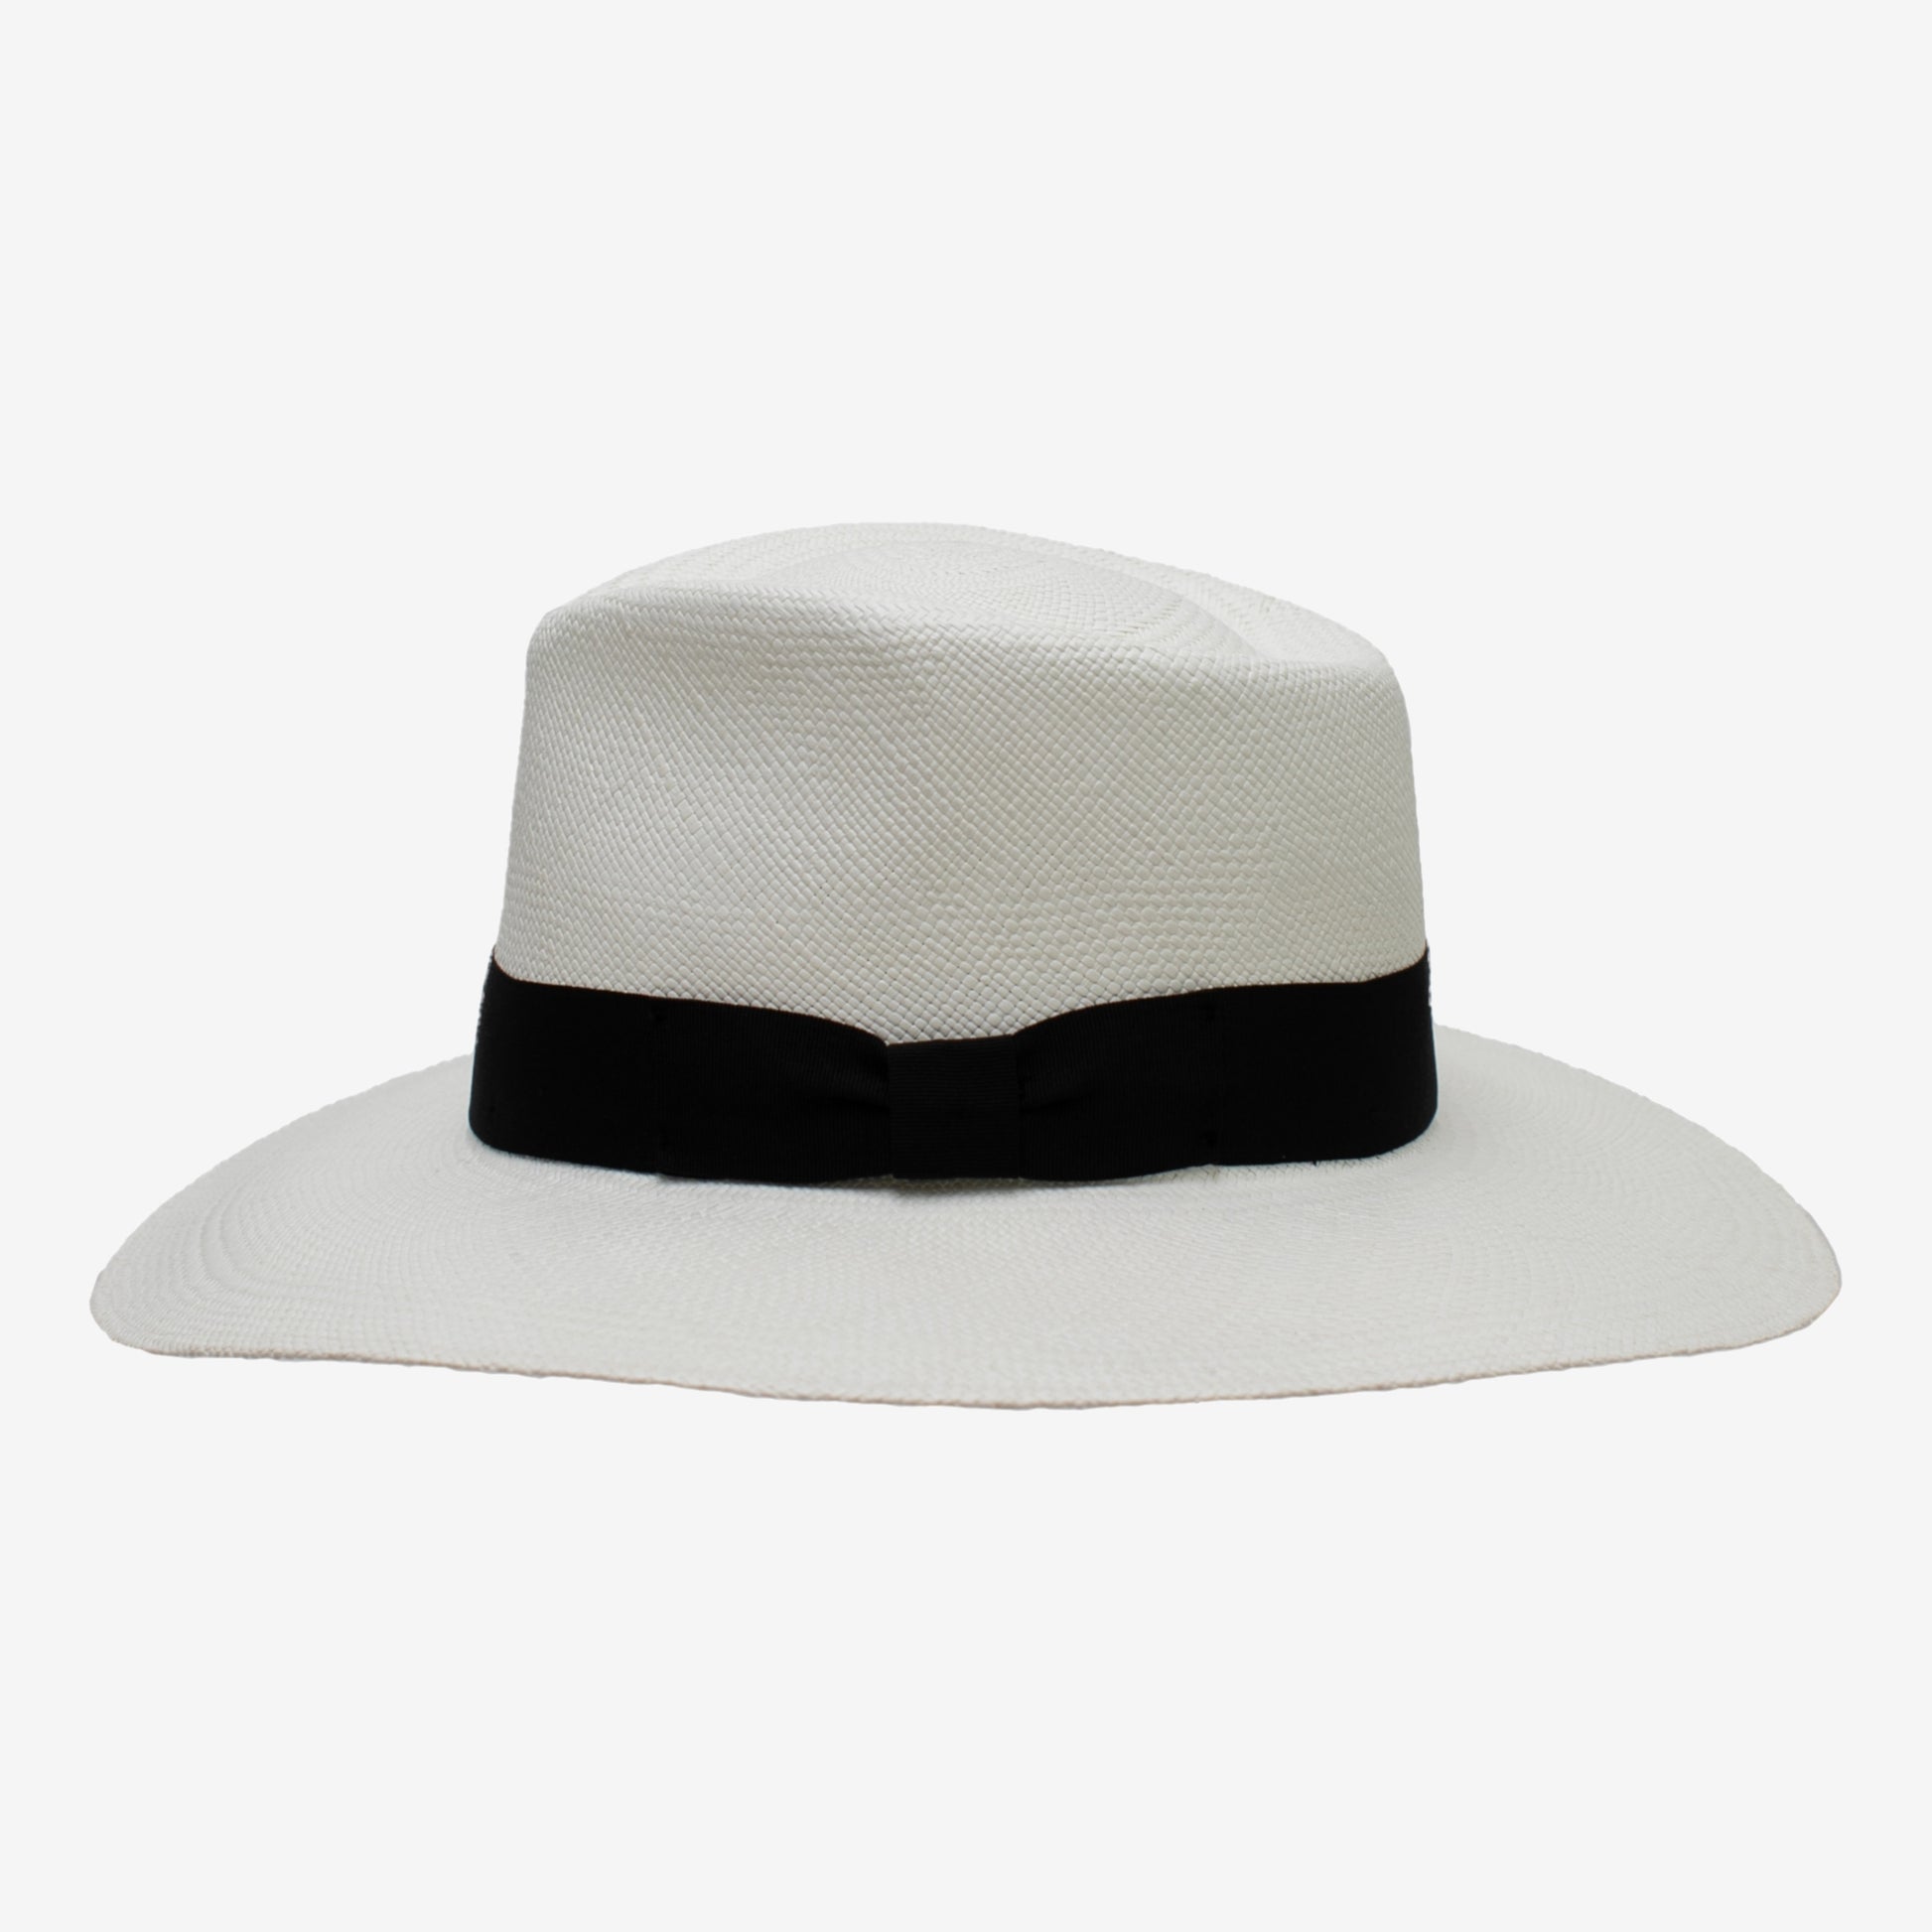 mindo-hats-the-melissa-wide-brim-straw-panama-hat-white-left